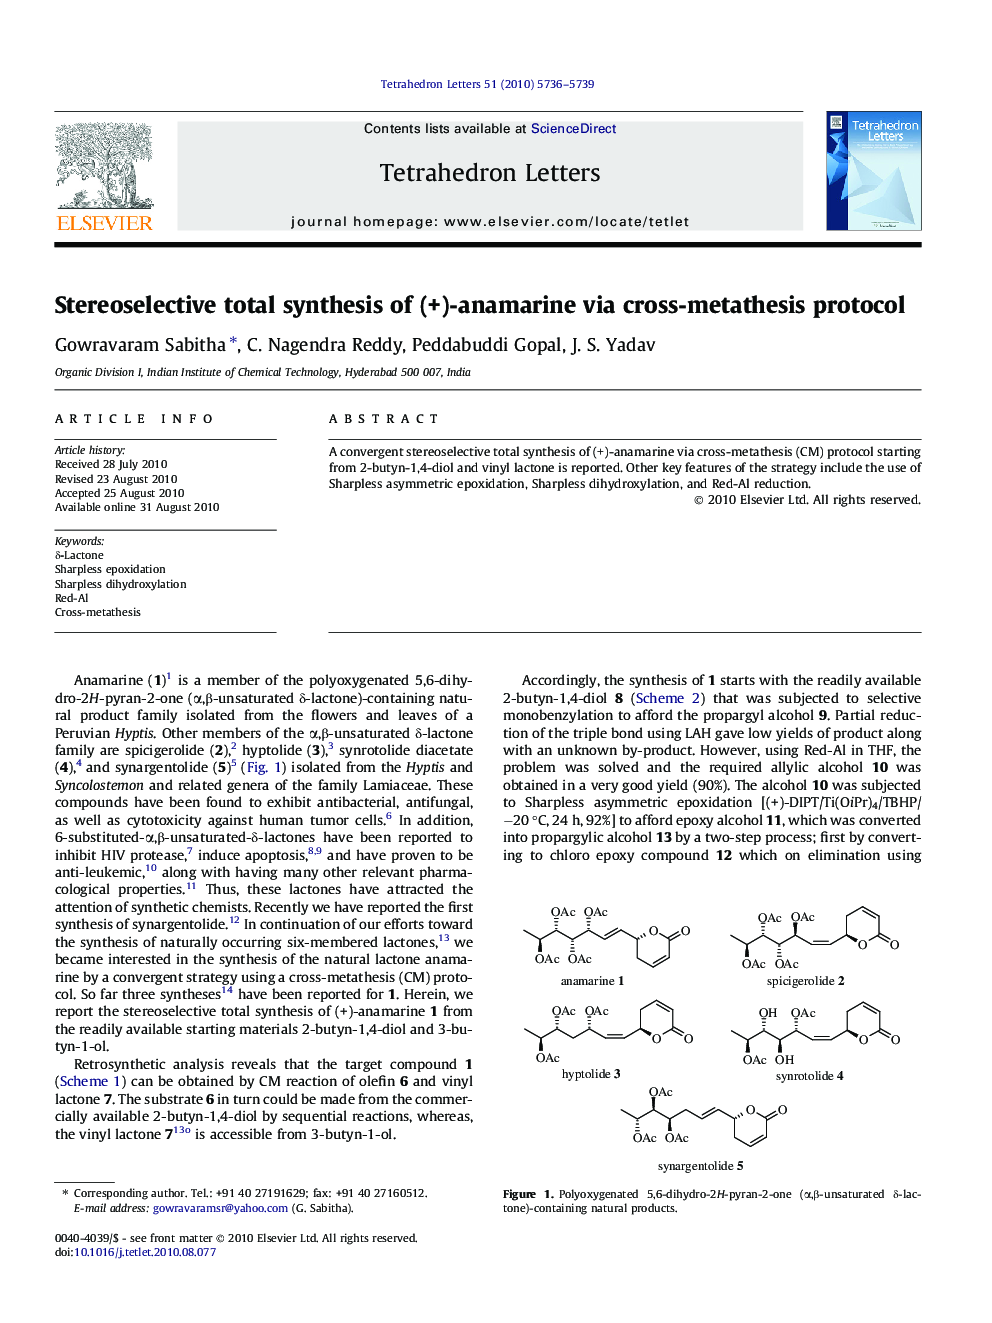 Stereoselective total synthesis of (+)-anamarine via cross-metathesis protocol